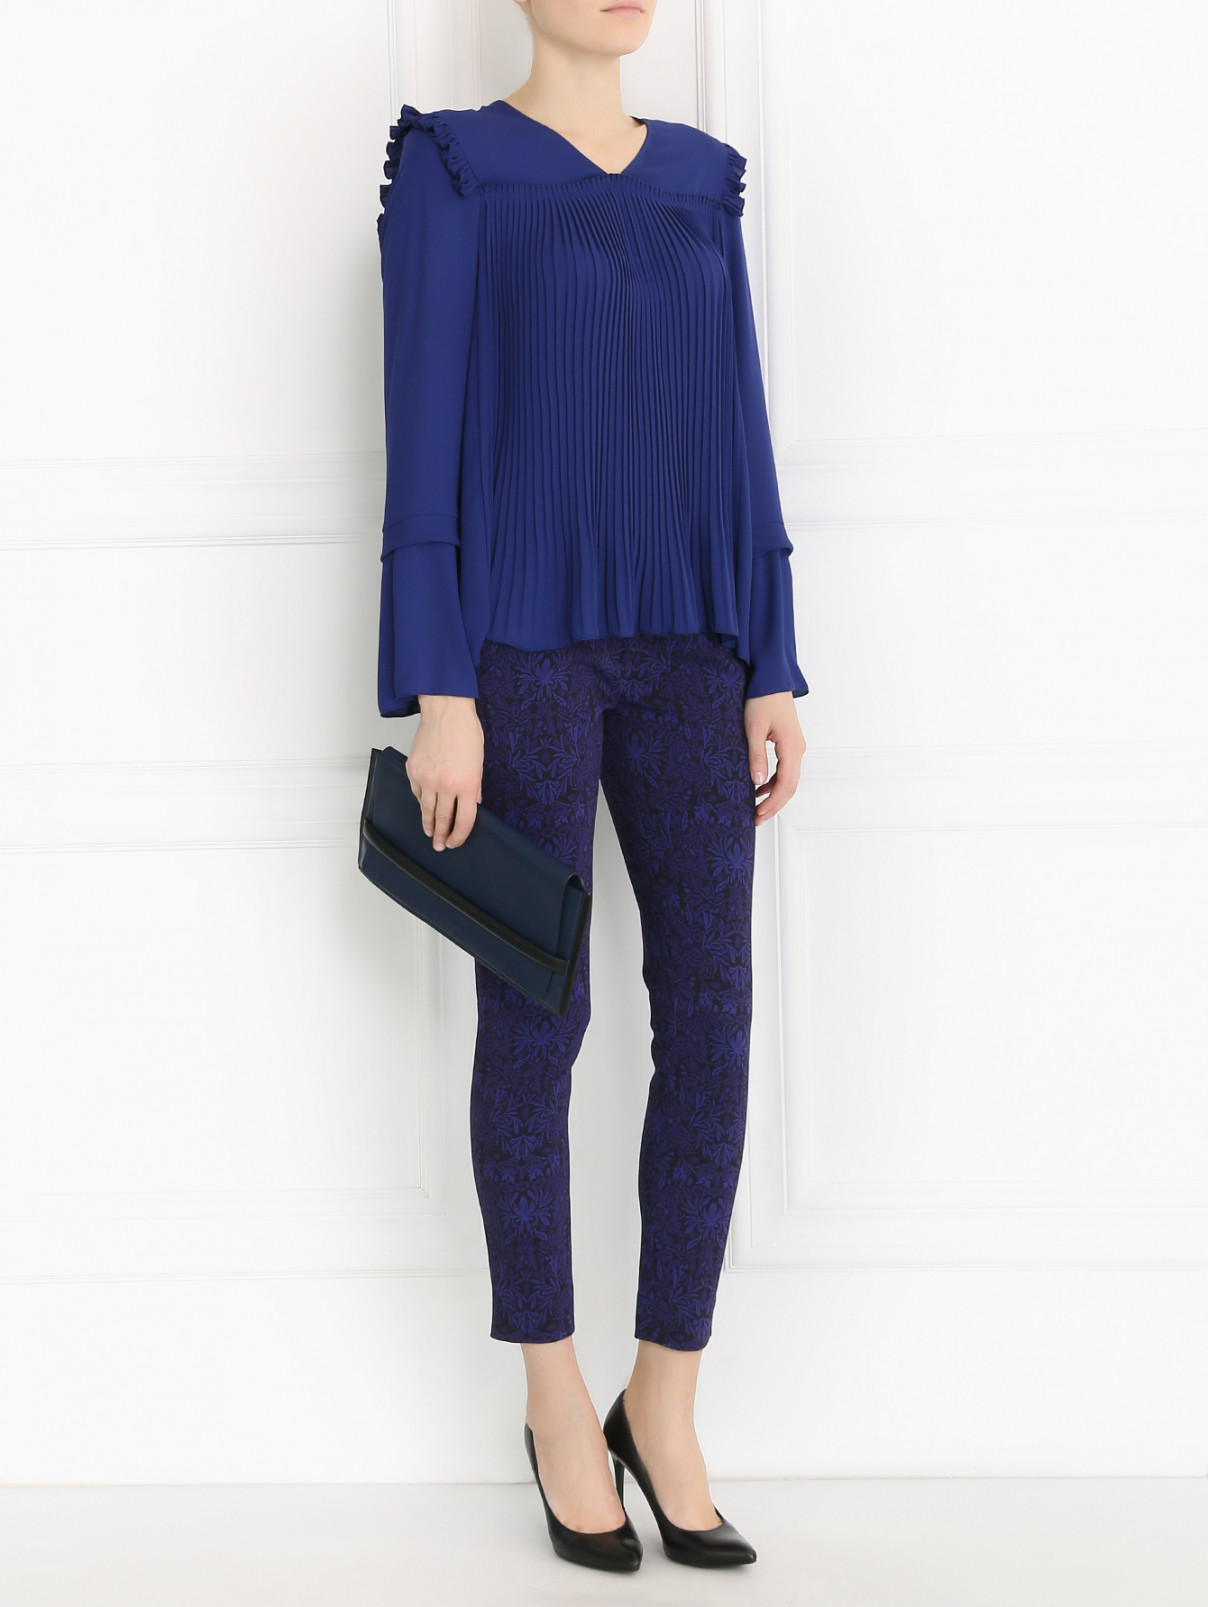 Блуза свободного кроя с рюшами See by Chloe  –  Модель Общий вид  – Цвет:  Синий